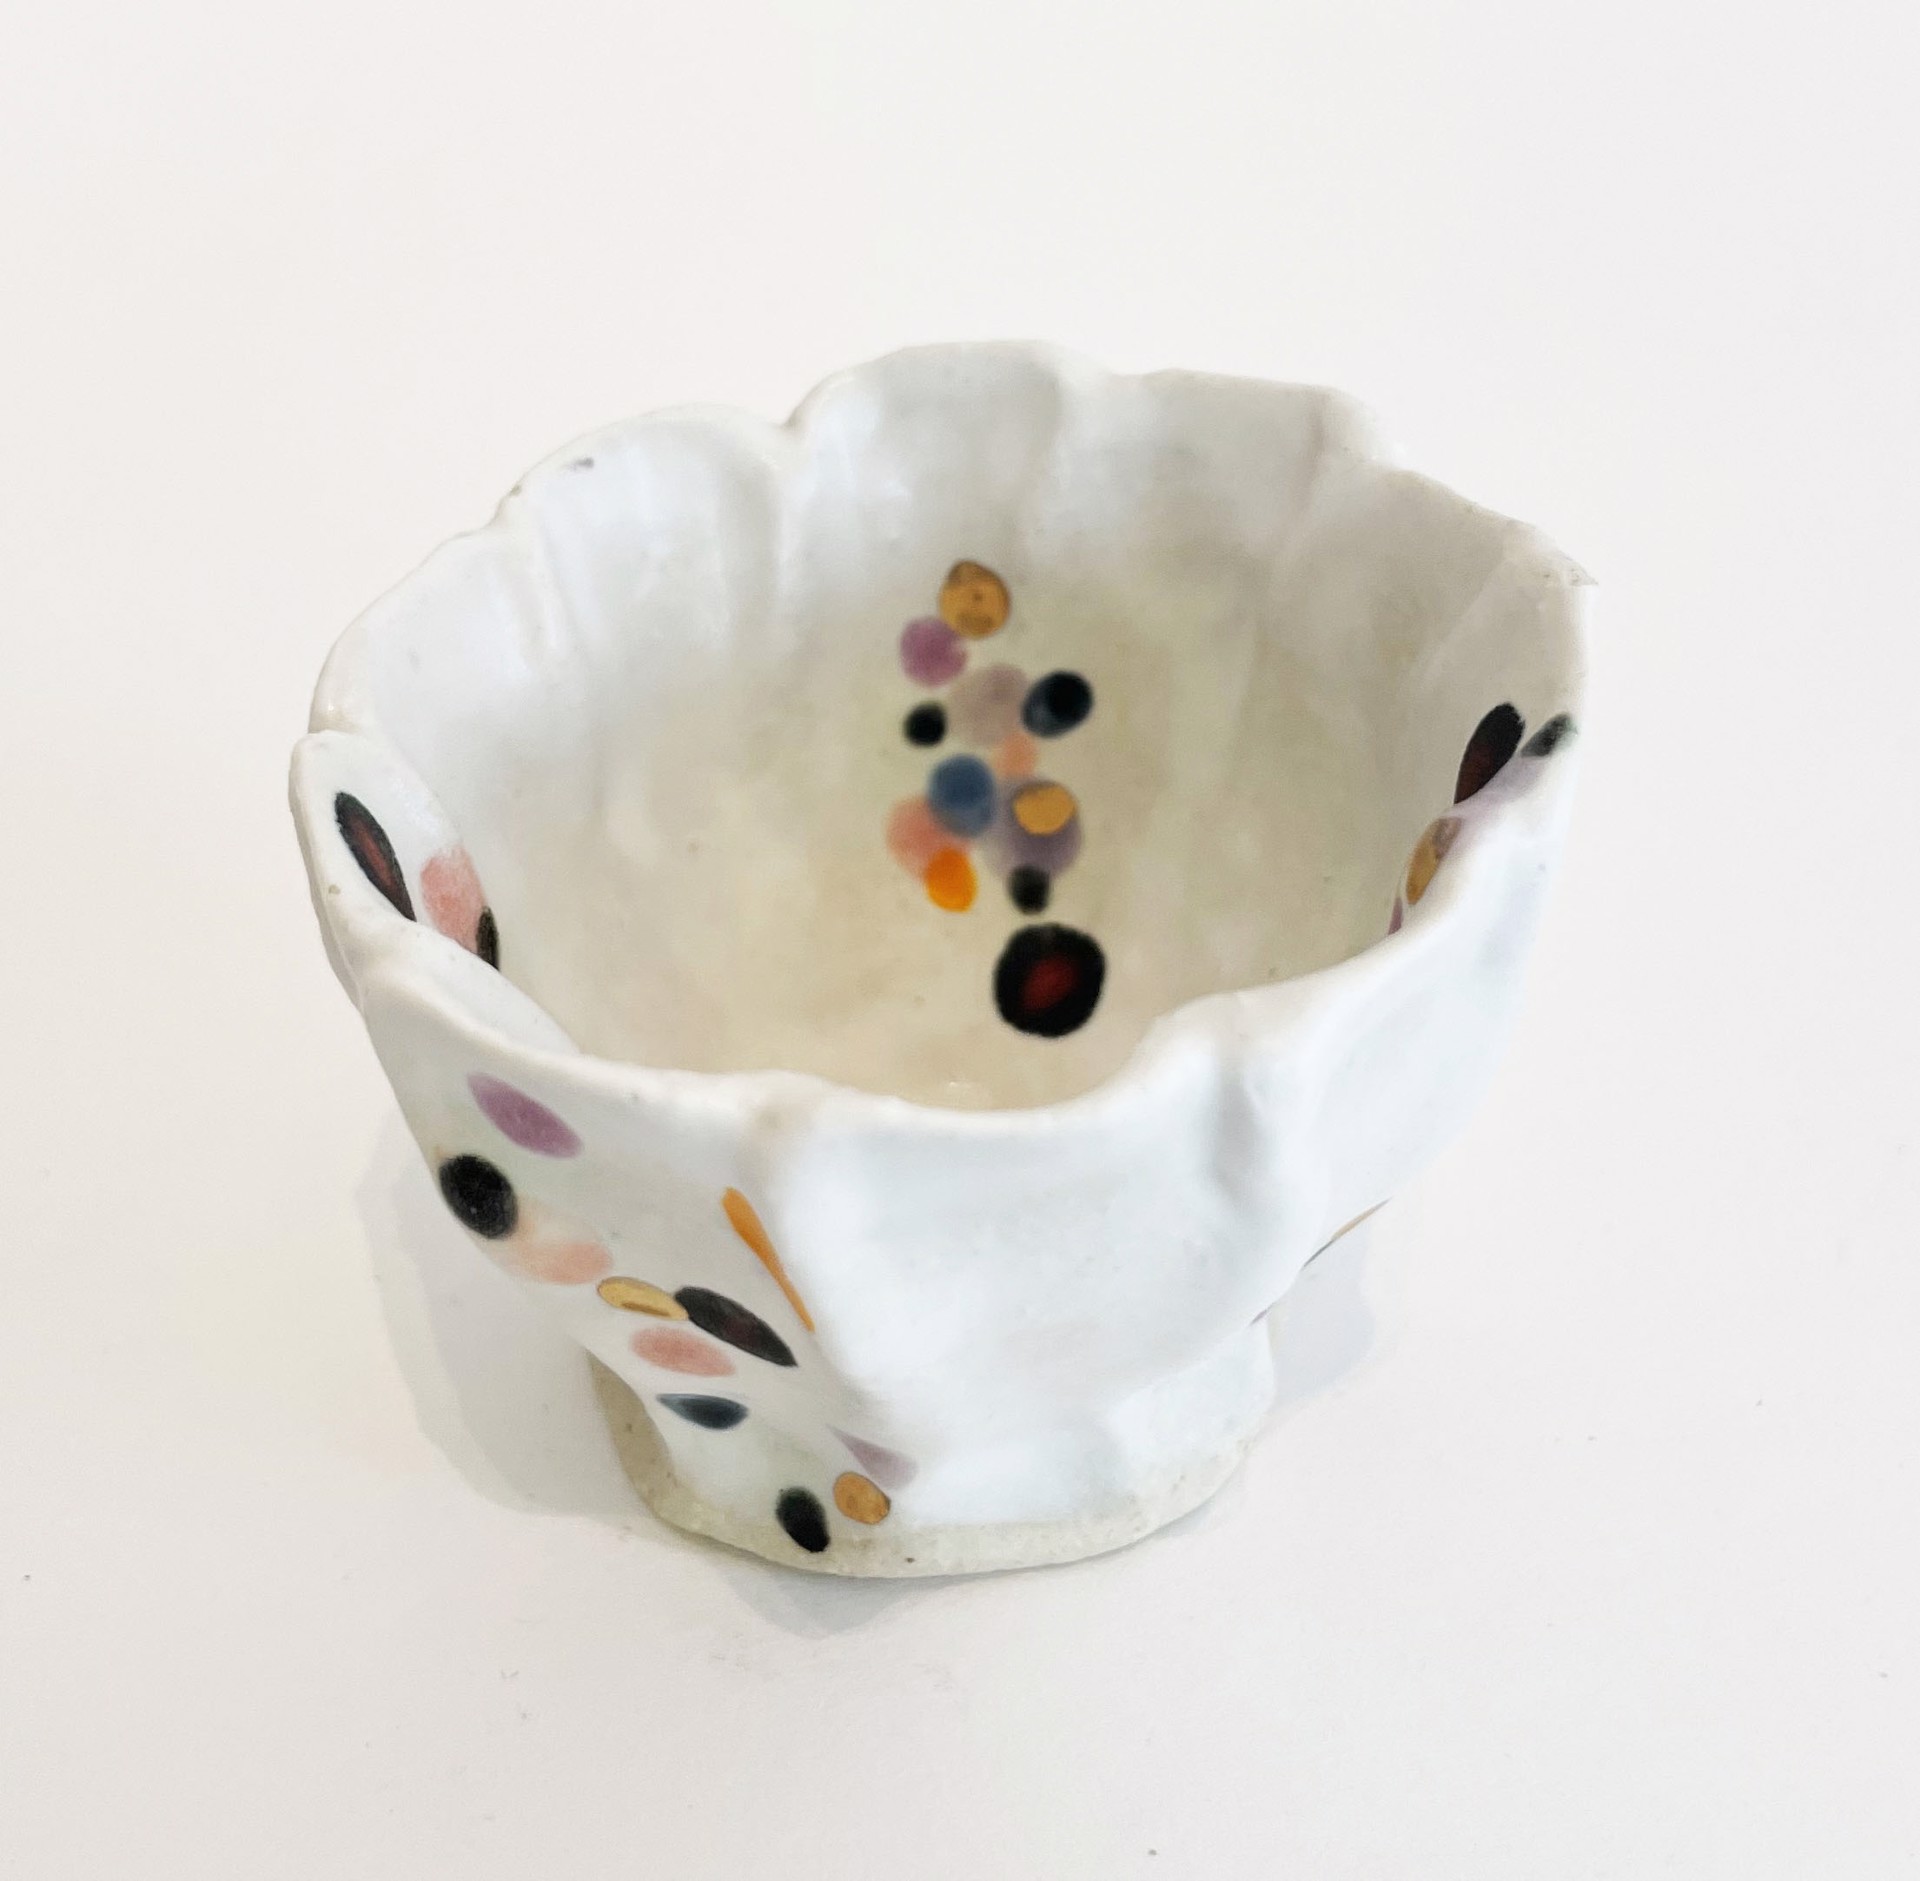 Polka Dot Pinch Bowl with Lustre Glaze by Bean Finneran